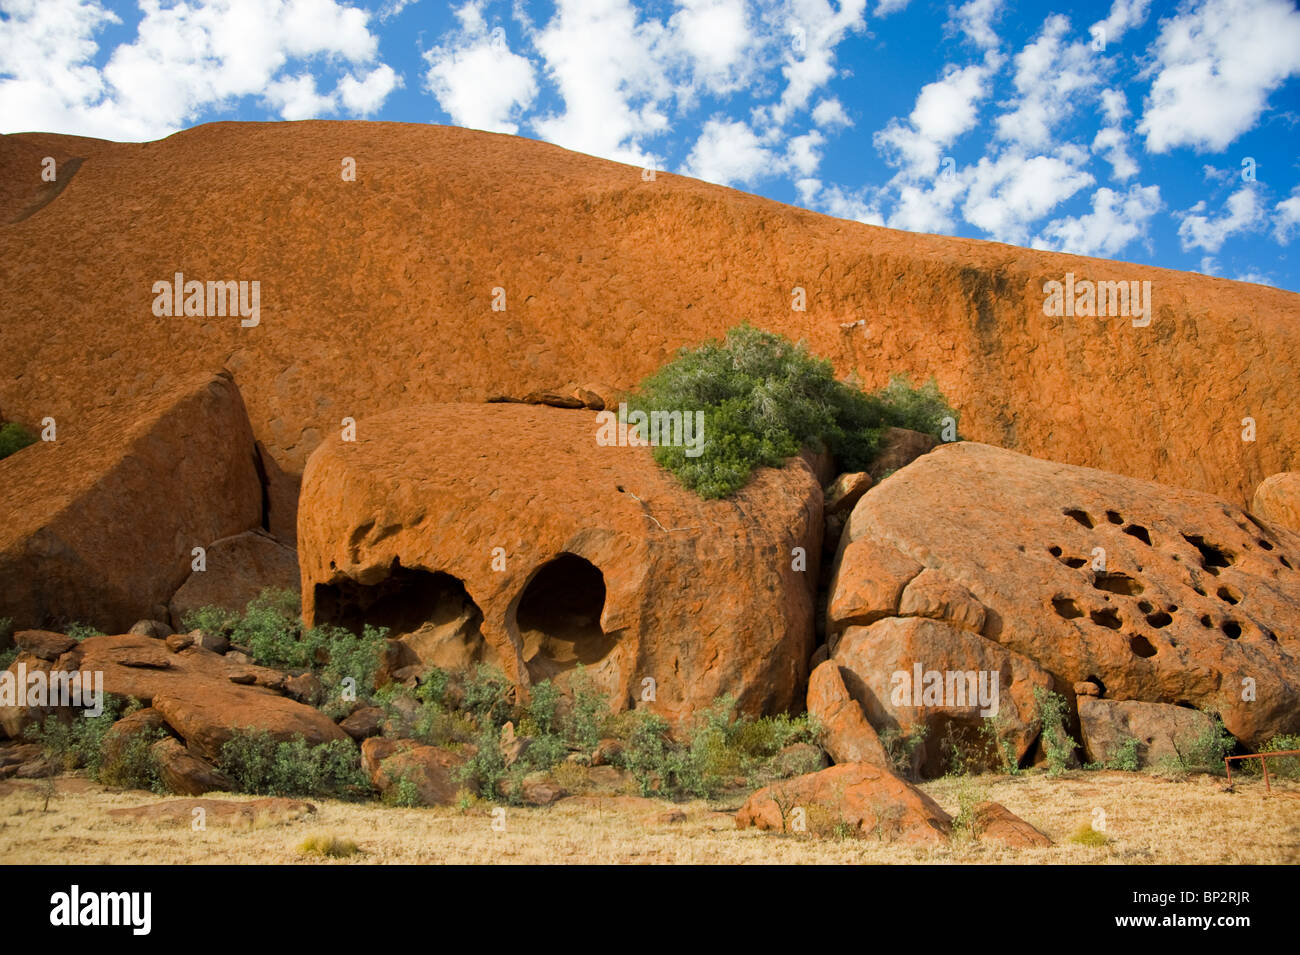 A part of Uluru (Ayers Rock), Australia Stock Photo